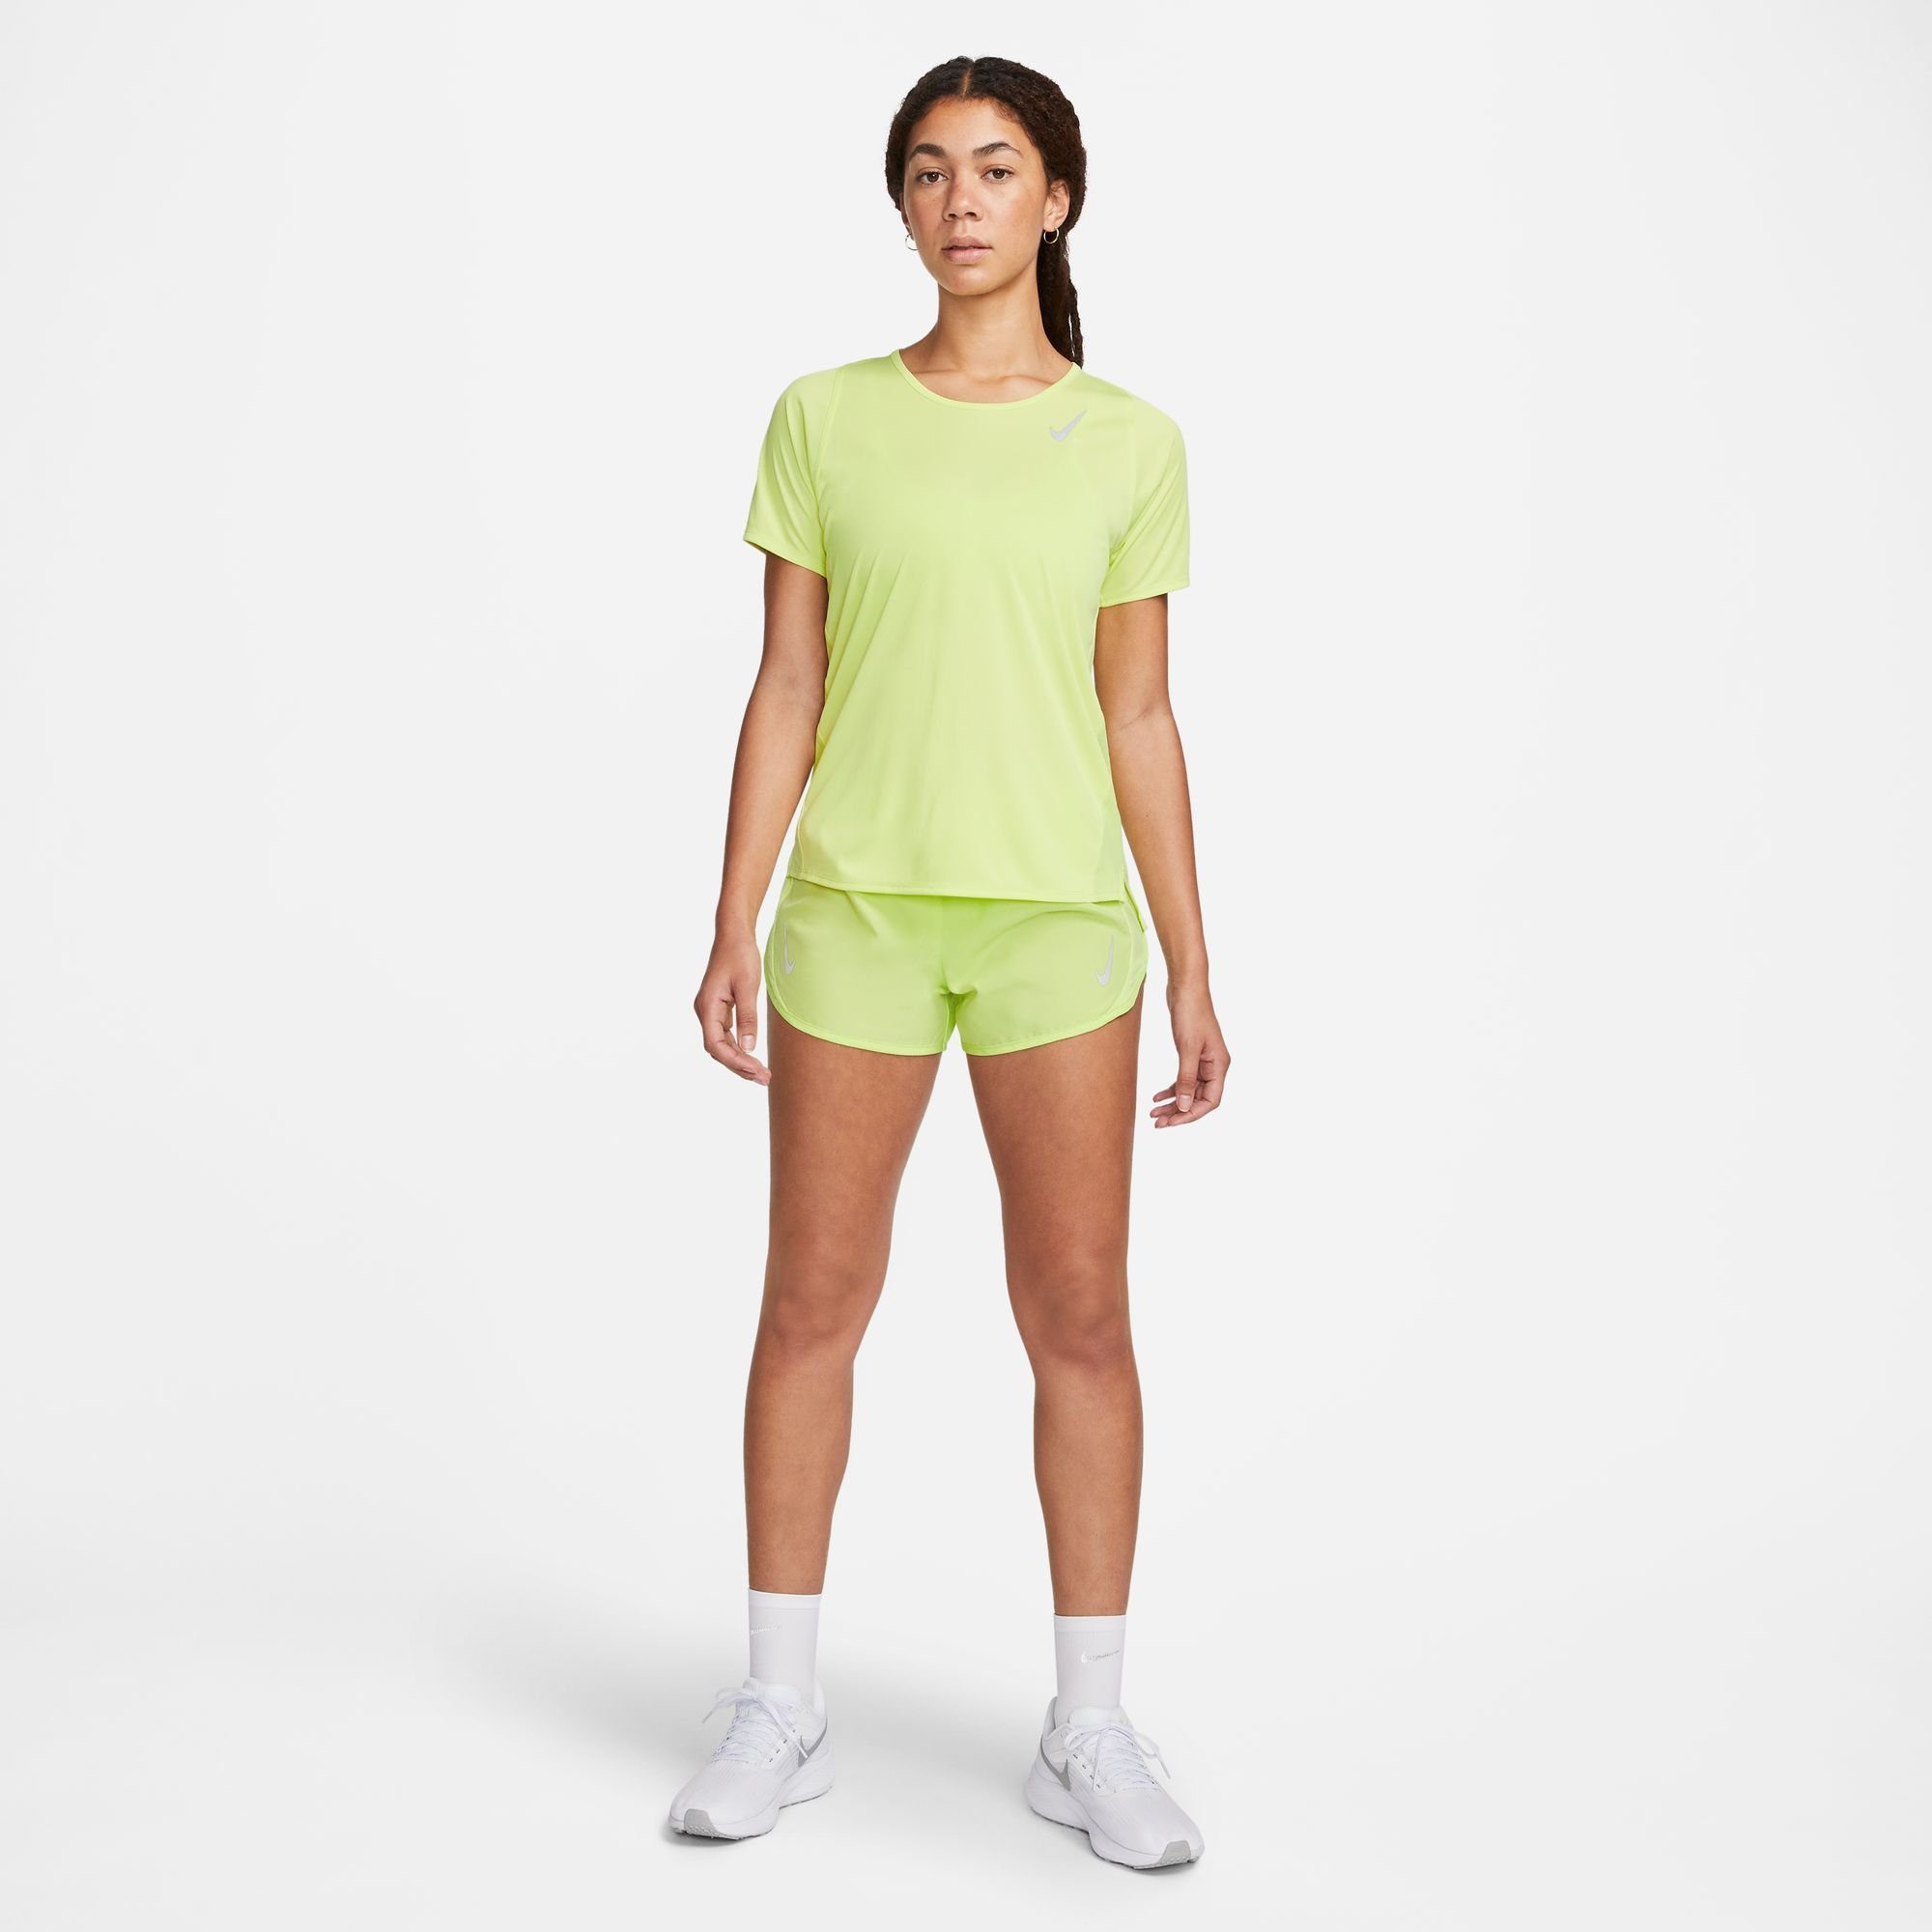 Nike SHORT-SLEEVE LEMON TOP WOMEN'S Laufshirt RACE TWIST/REFLECTIVE LT SILV DRI-FIT RUNNING